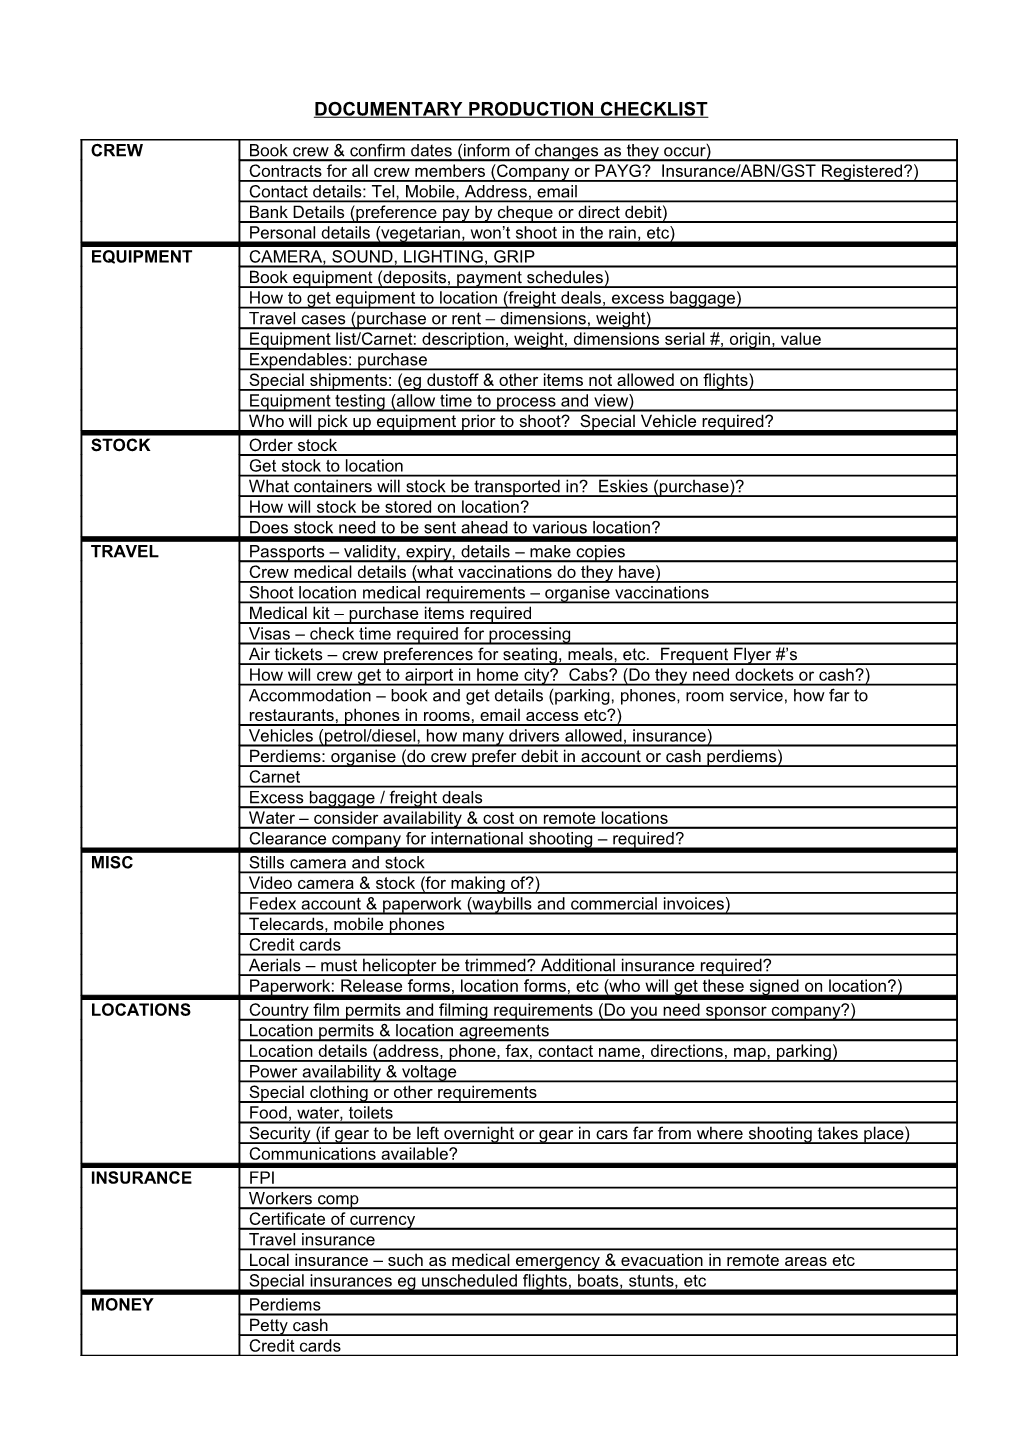 Documentary Production Checklist